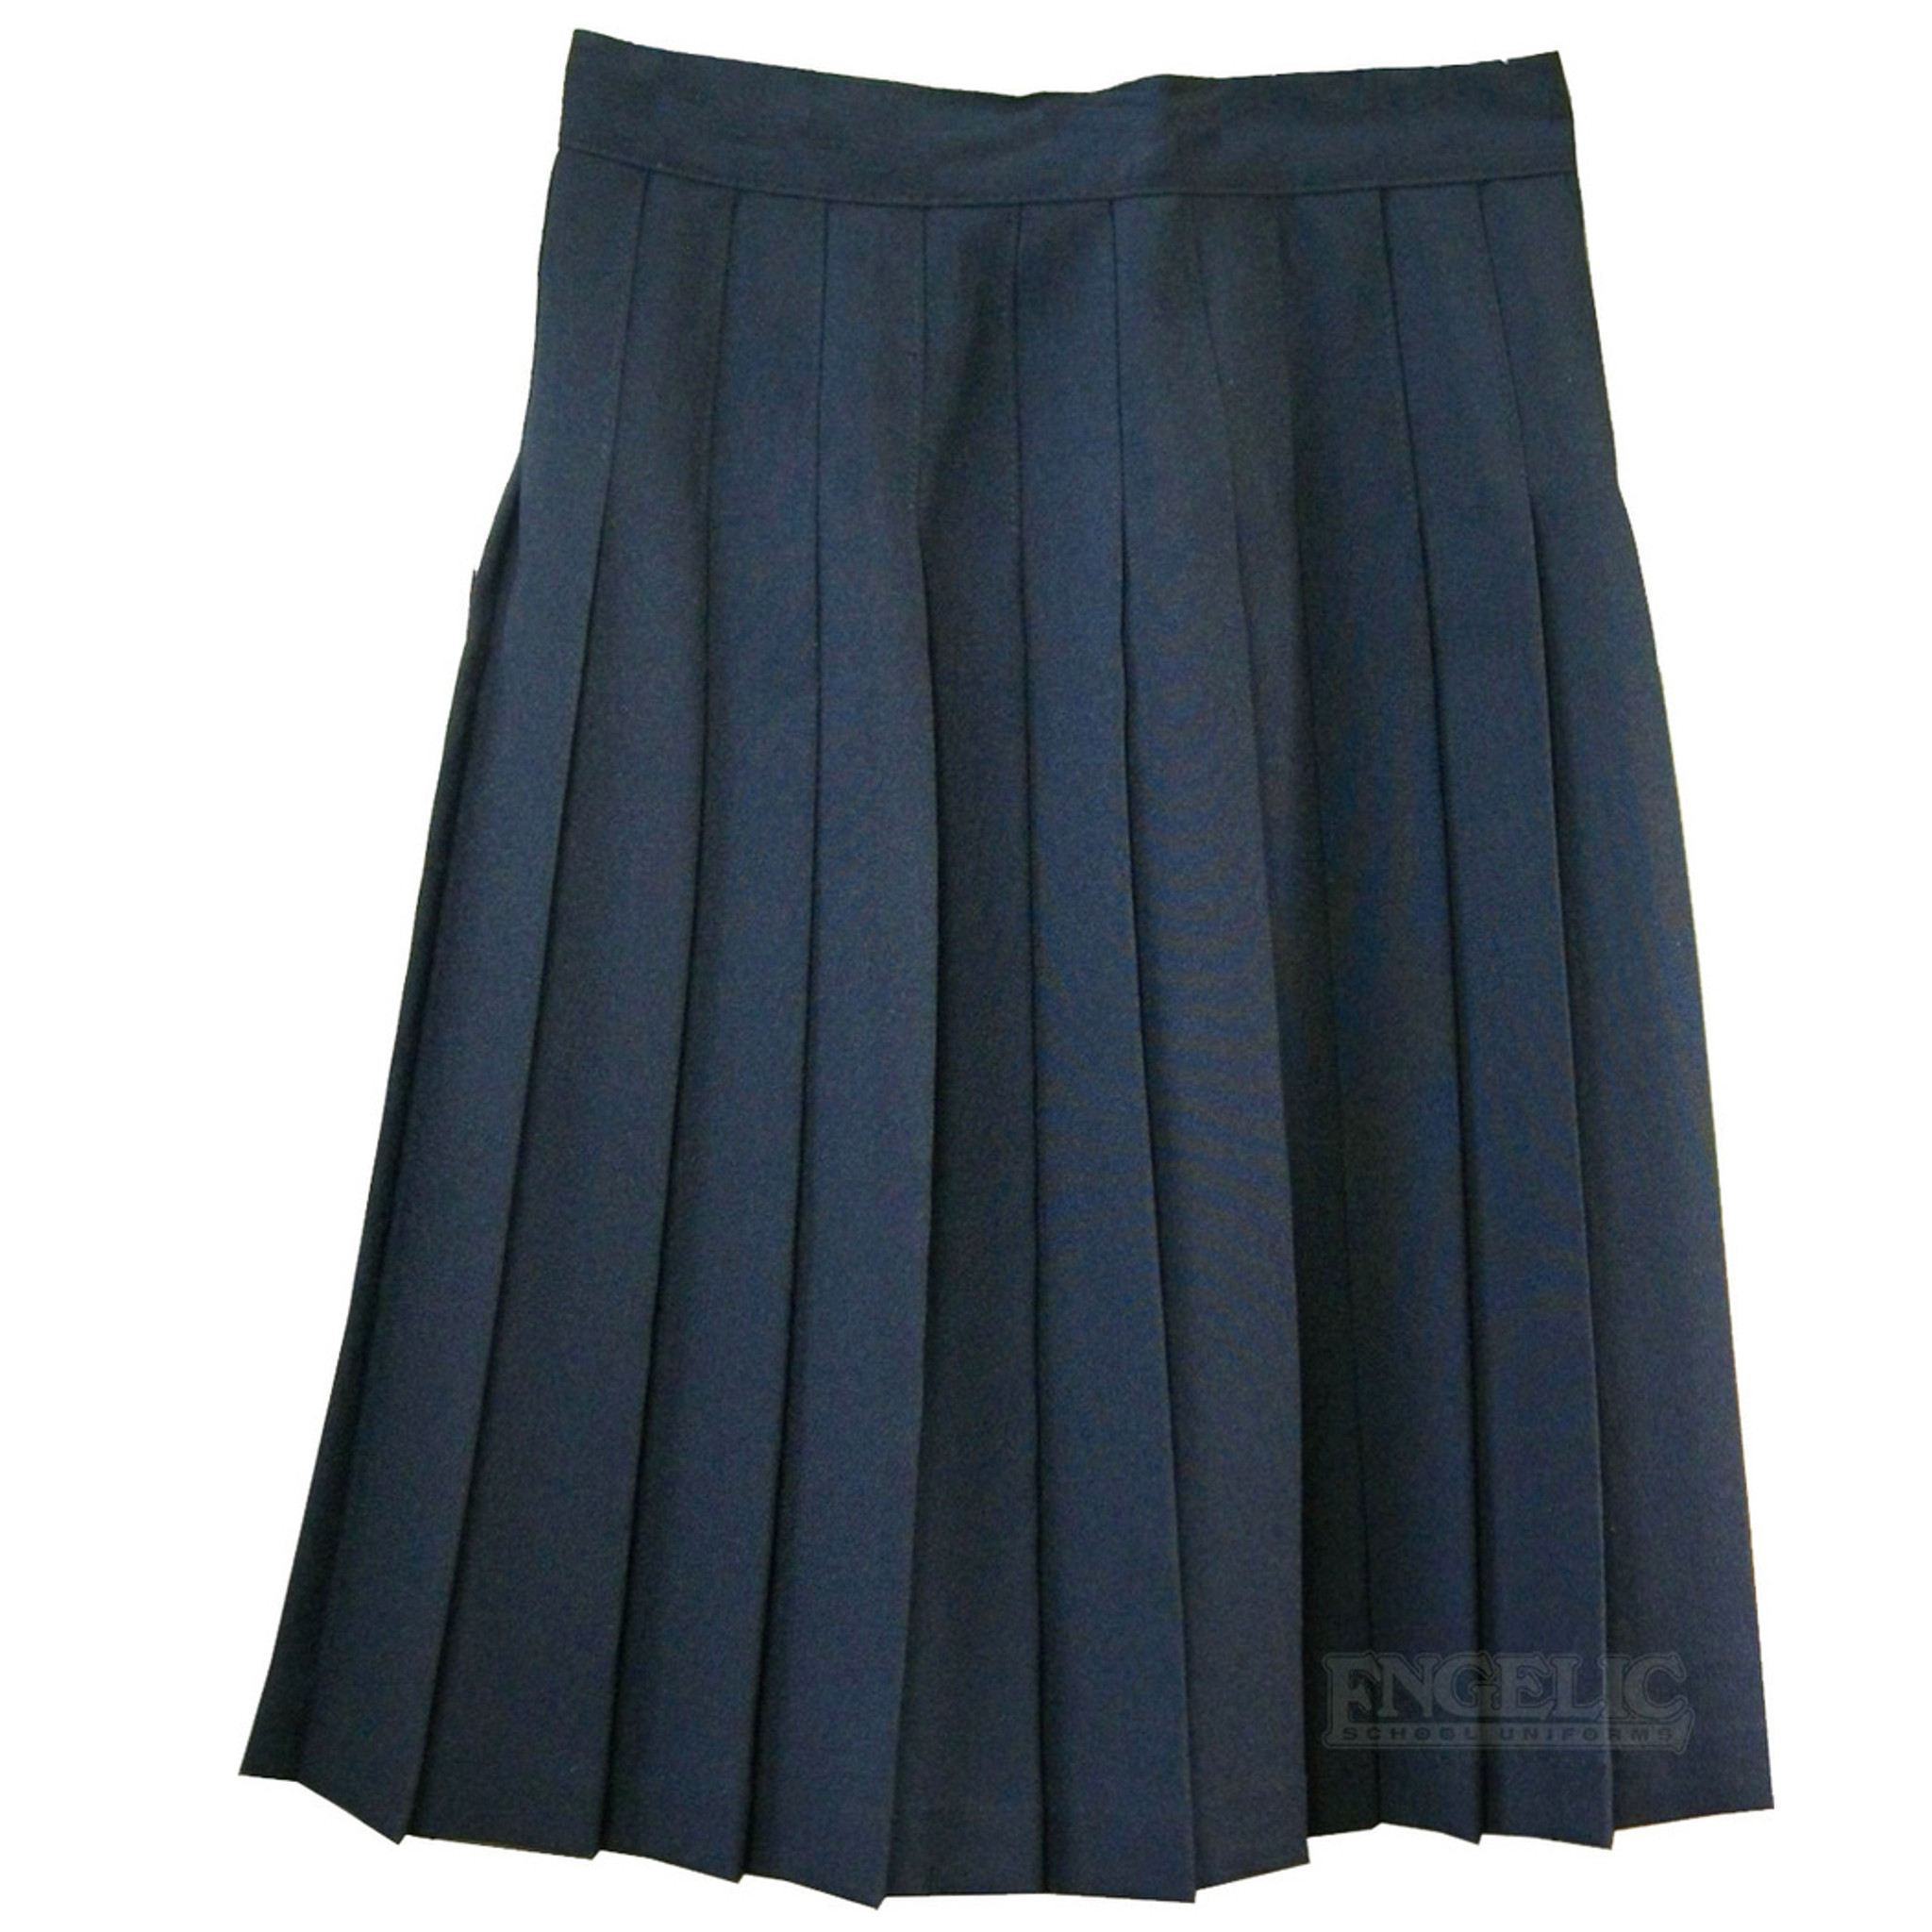 School uniform skirts: Campus Fashion with Classic Elegance插图4